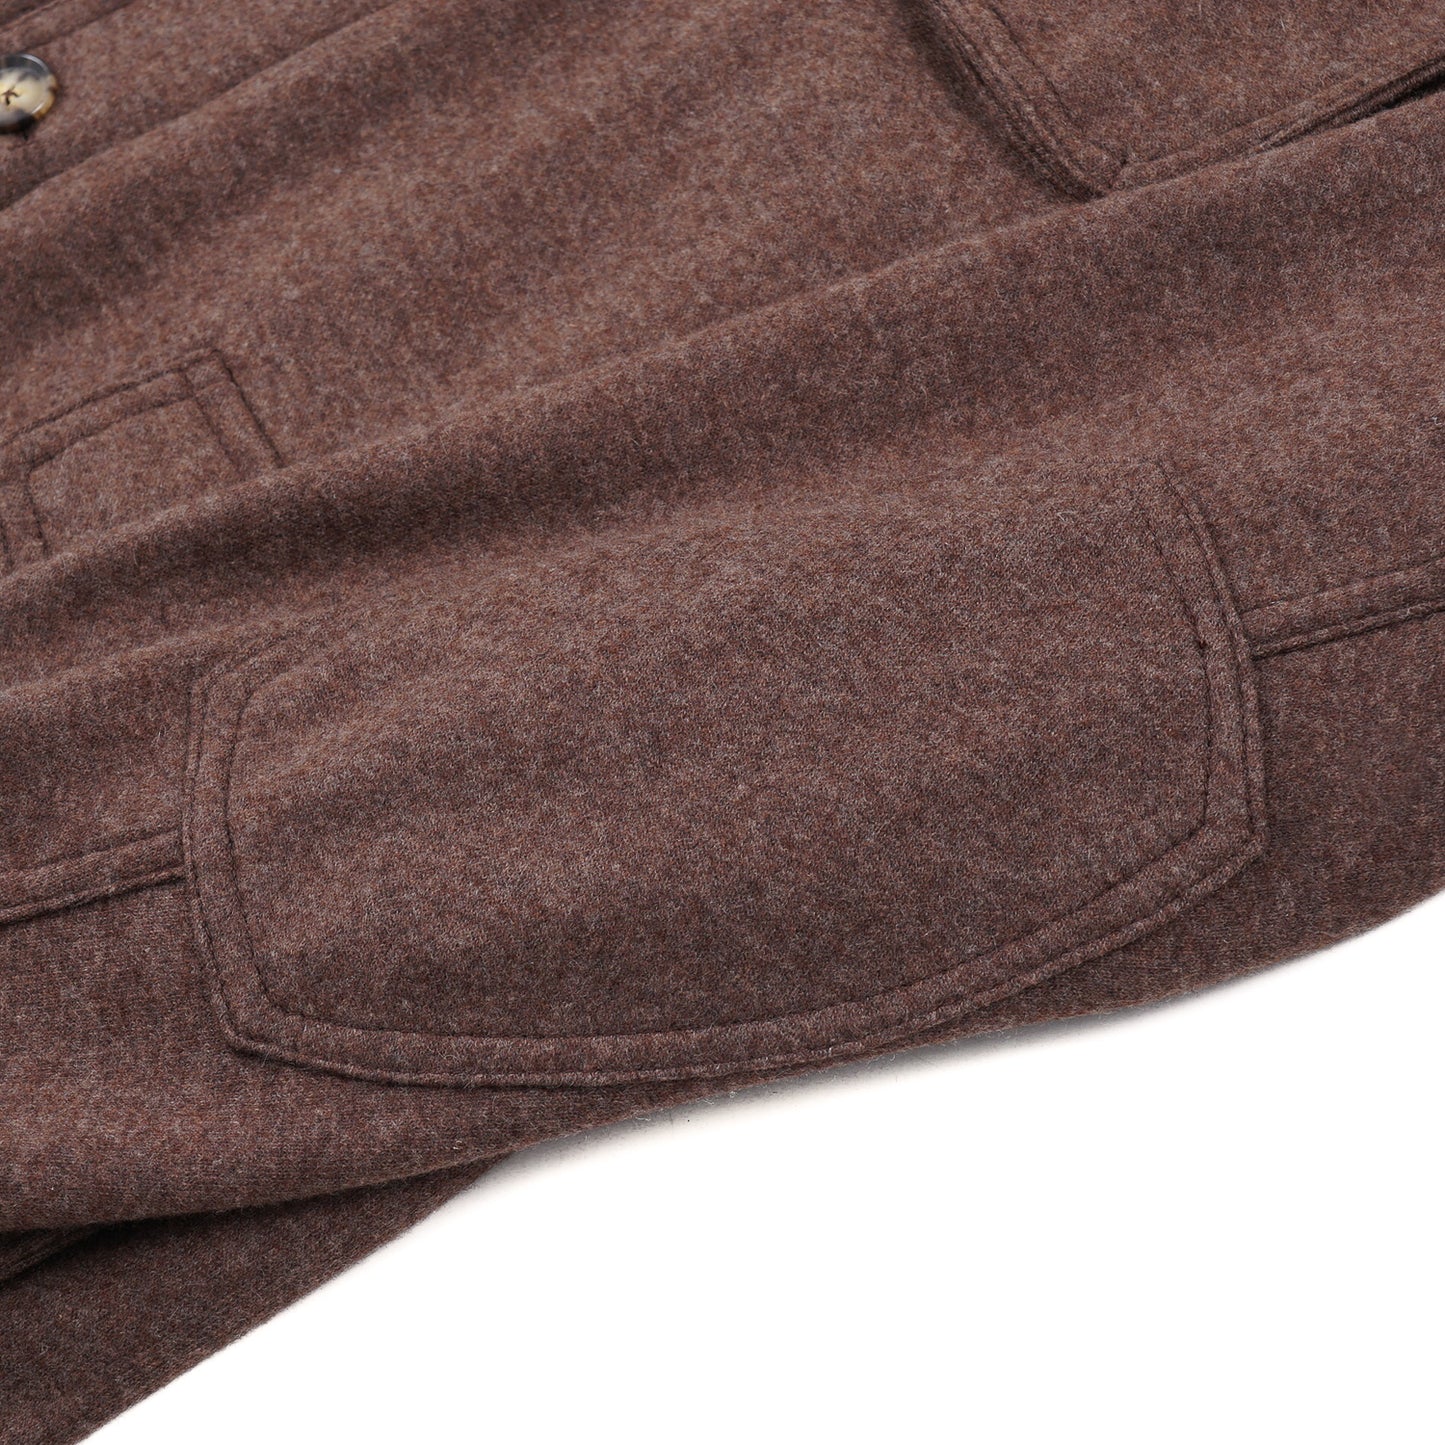 Isaia Jersey Cashmere Field Jacket - Top Shelf Apparel